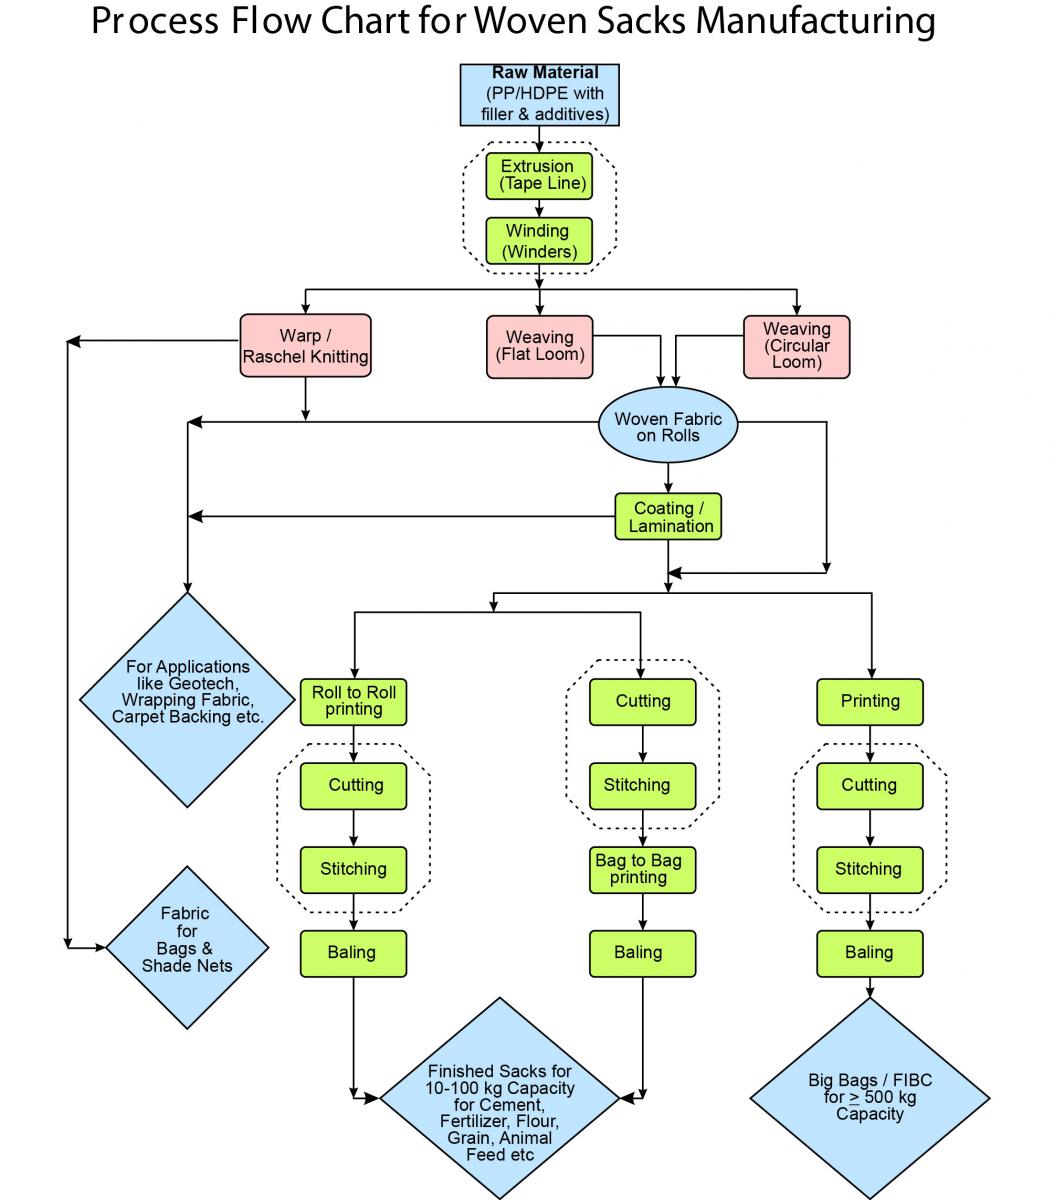 video production process flow chart